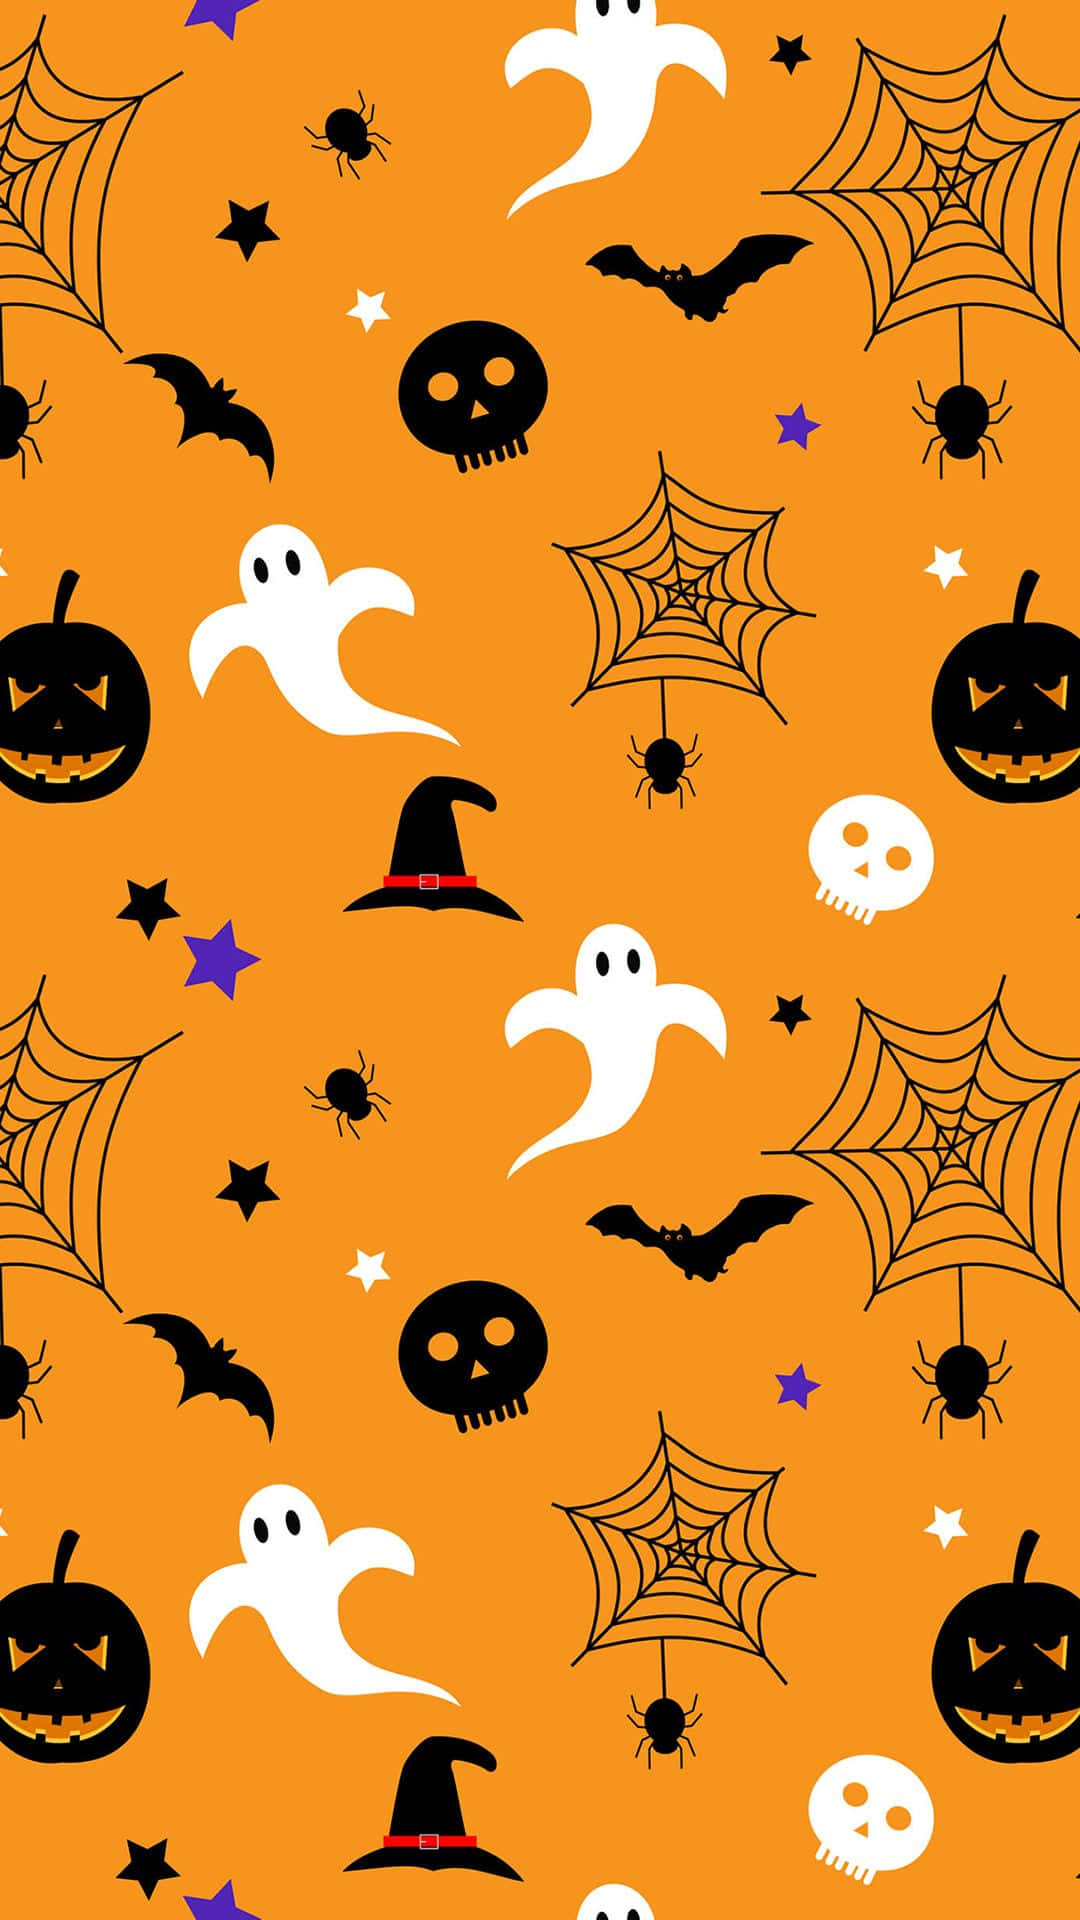 Enjoying the Fun and Fright of Halloween in Orange Wallpaper